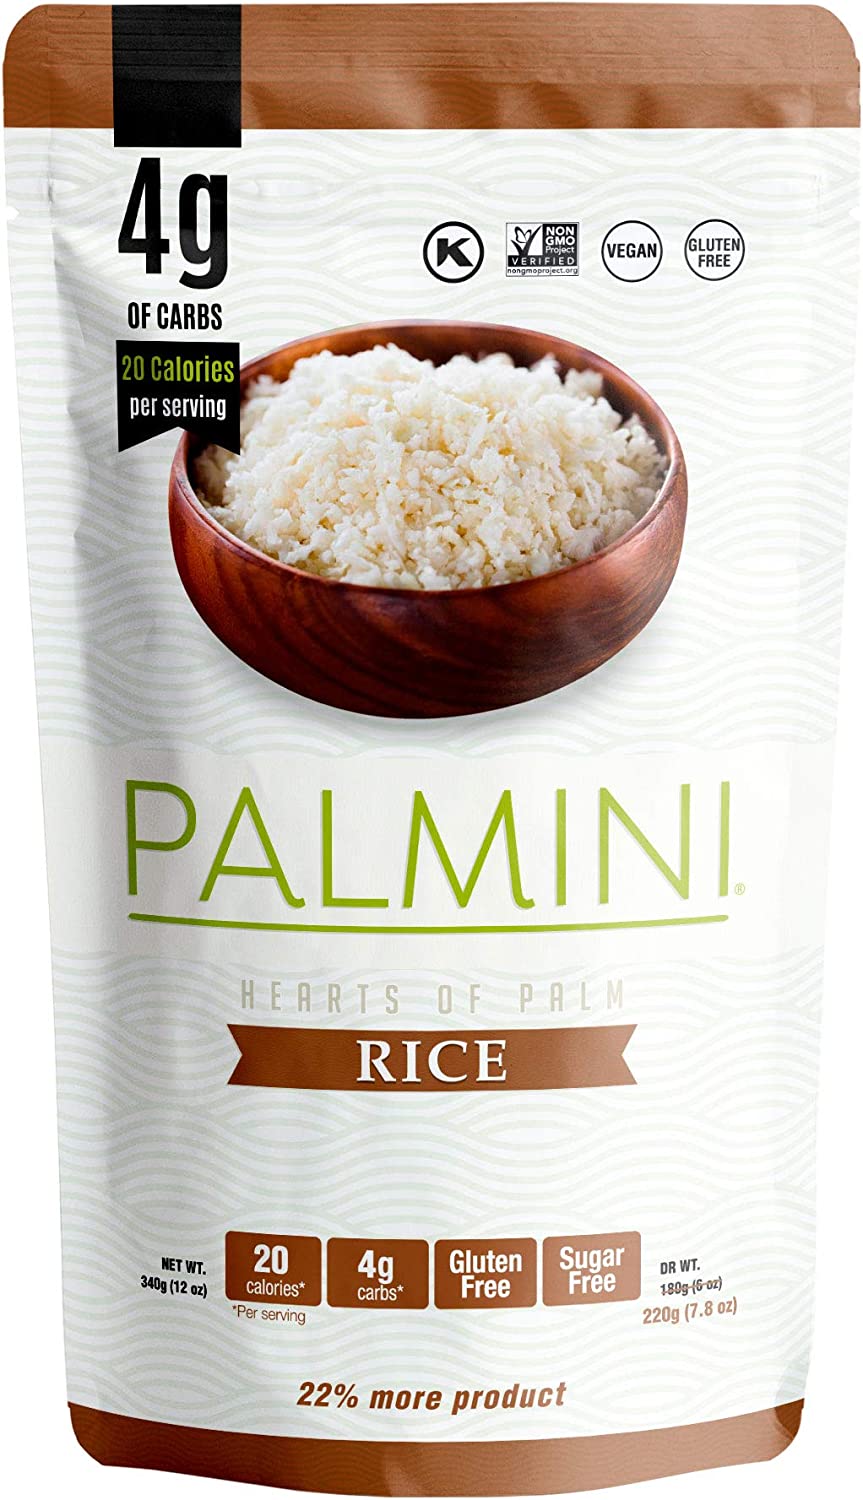 O.A. FOODS PALMINI Gluten Free Rice, 340g, Organic, Vegan, Non-GMO, Sugar Free